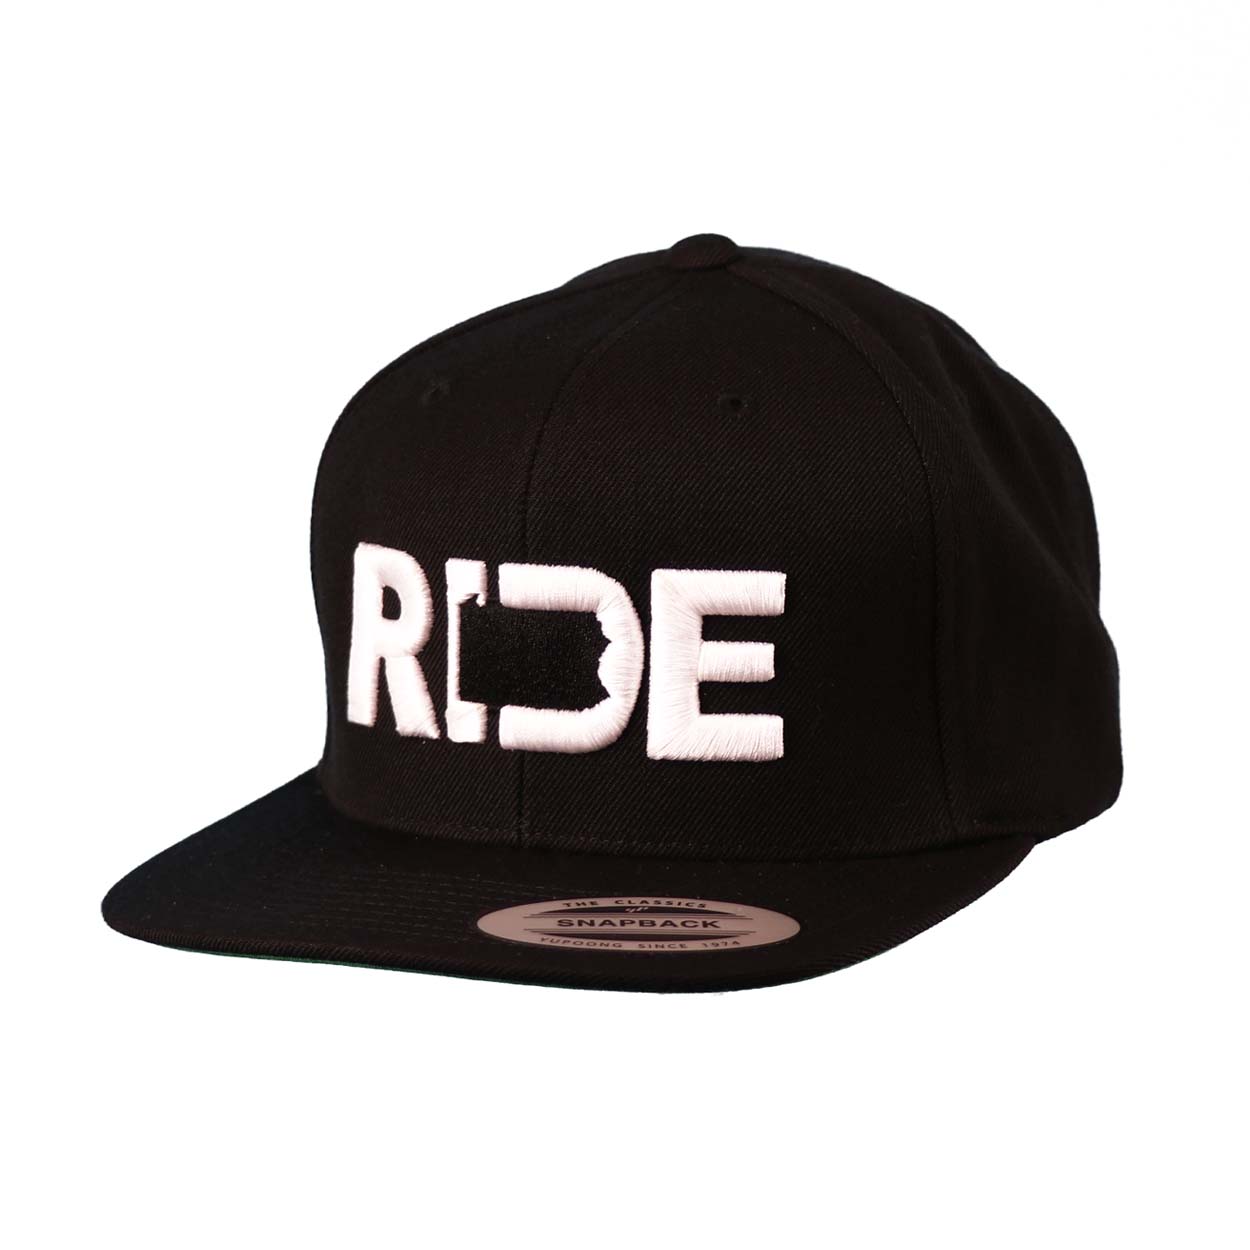 Ride Pennsylvania Classic Pro 3D Puff Embroidered Snapback Flat Brim Hat Black